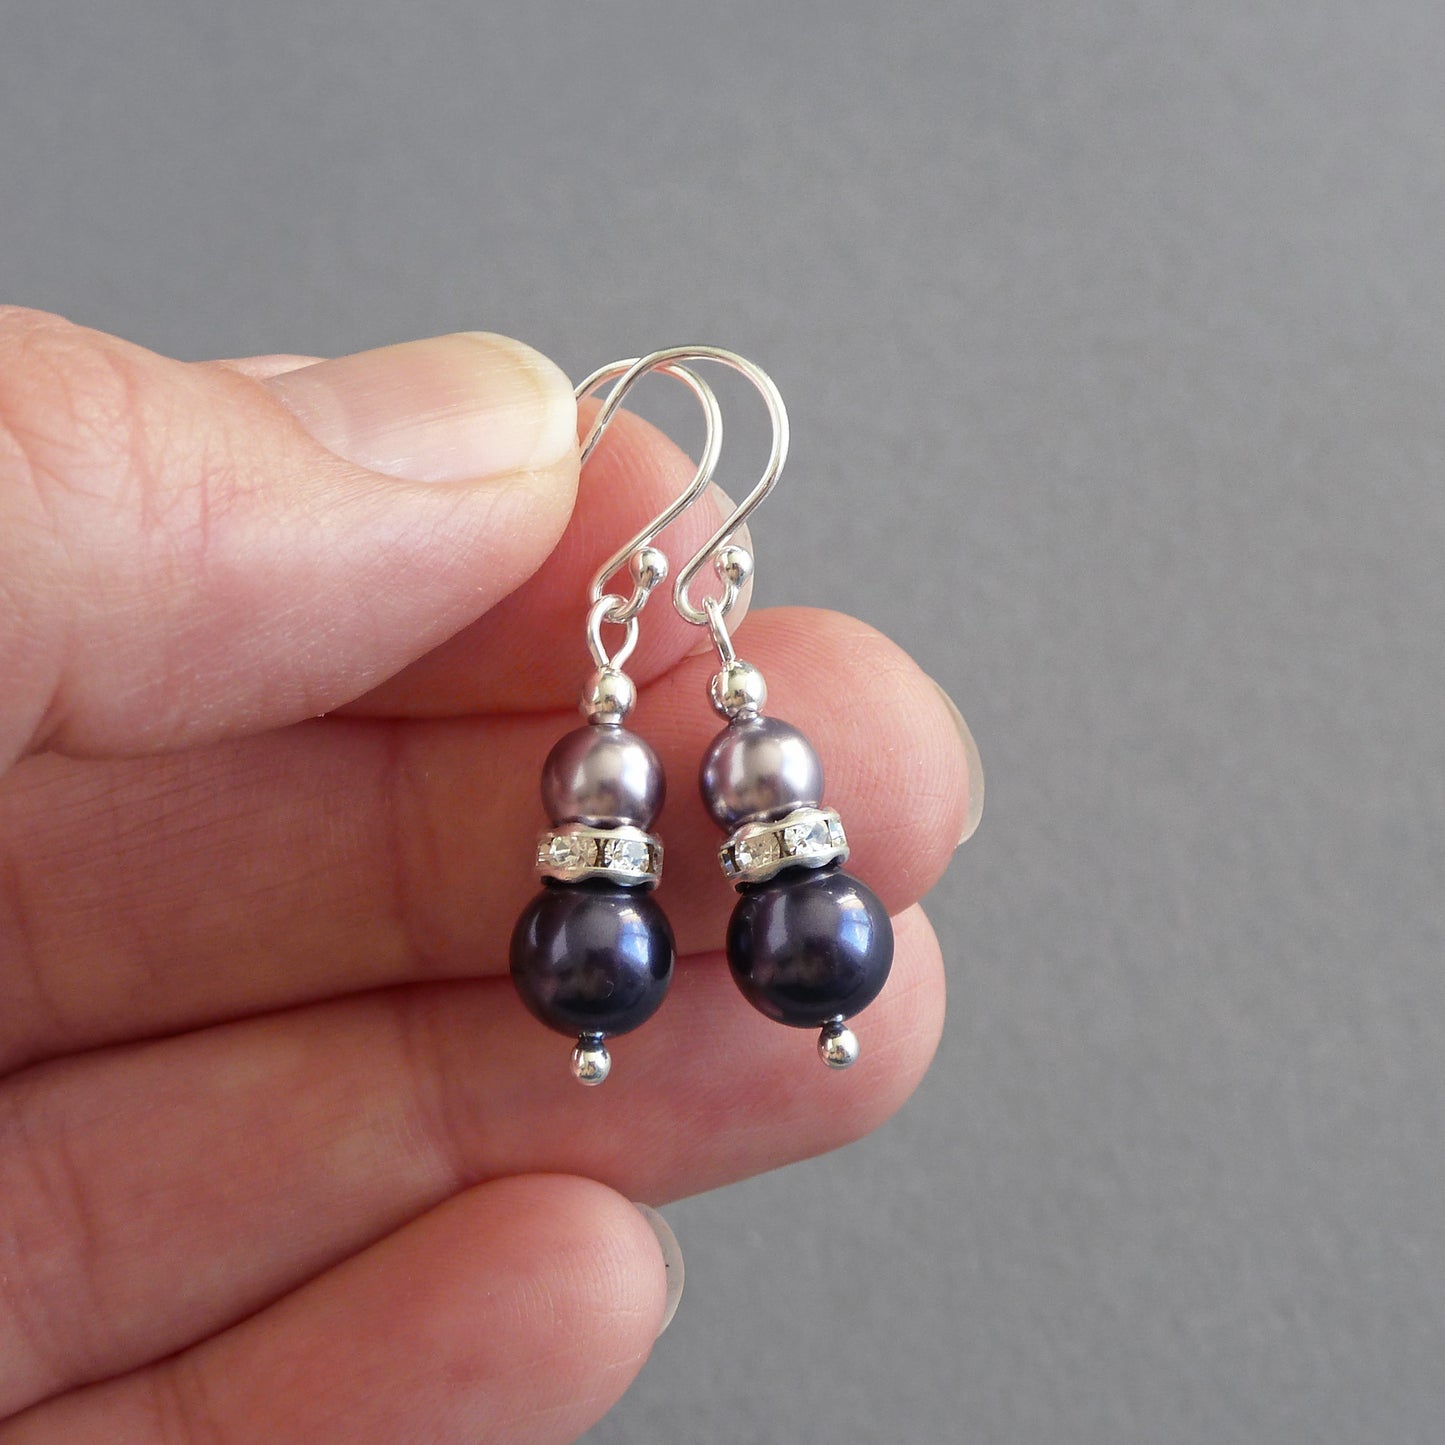 Dark purple and lilac earrings